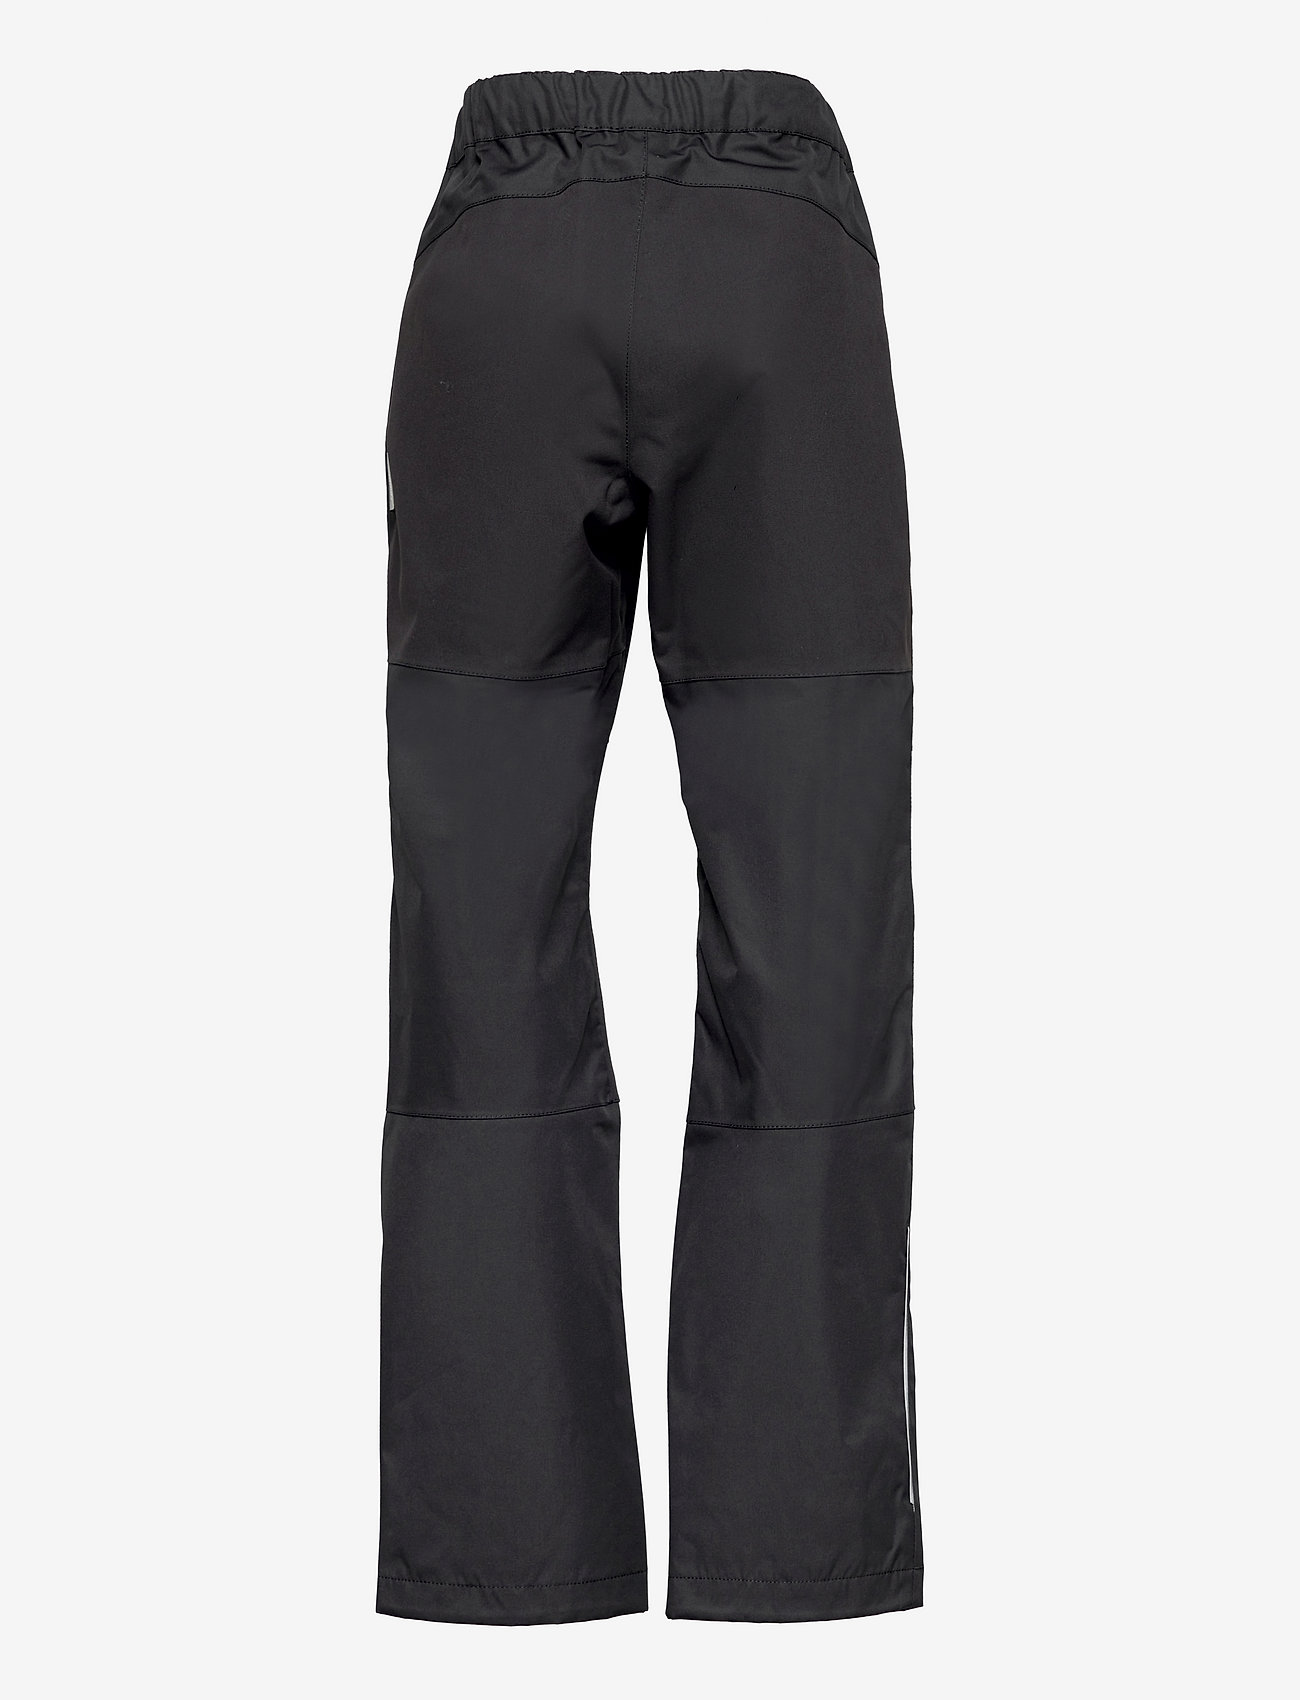 Reima - Reimatec pants, Lento - pantalons softshell - black - 1